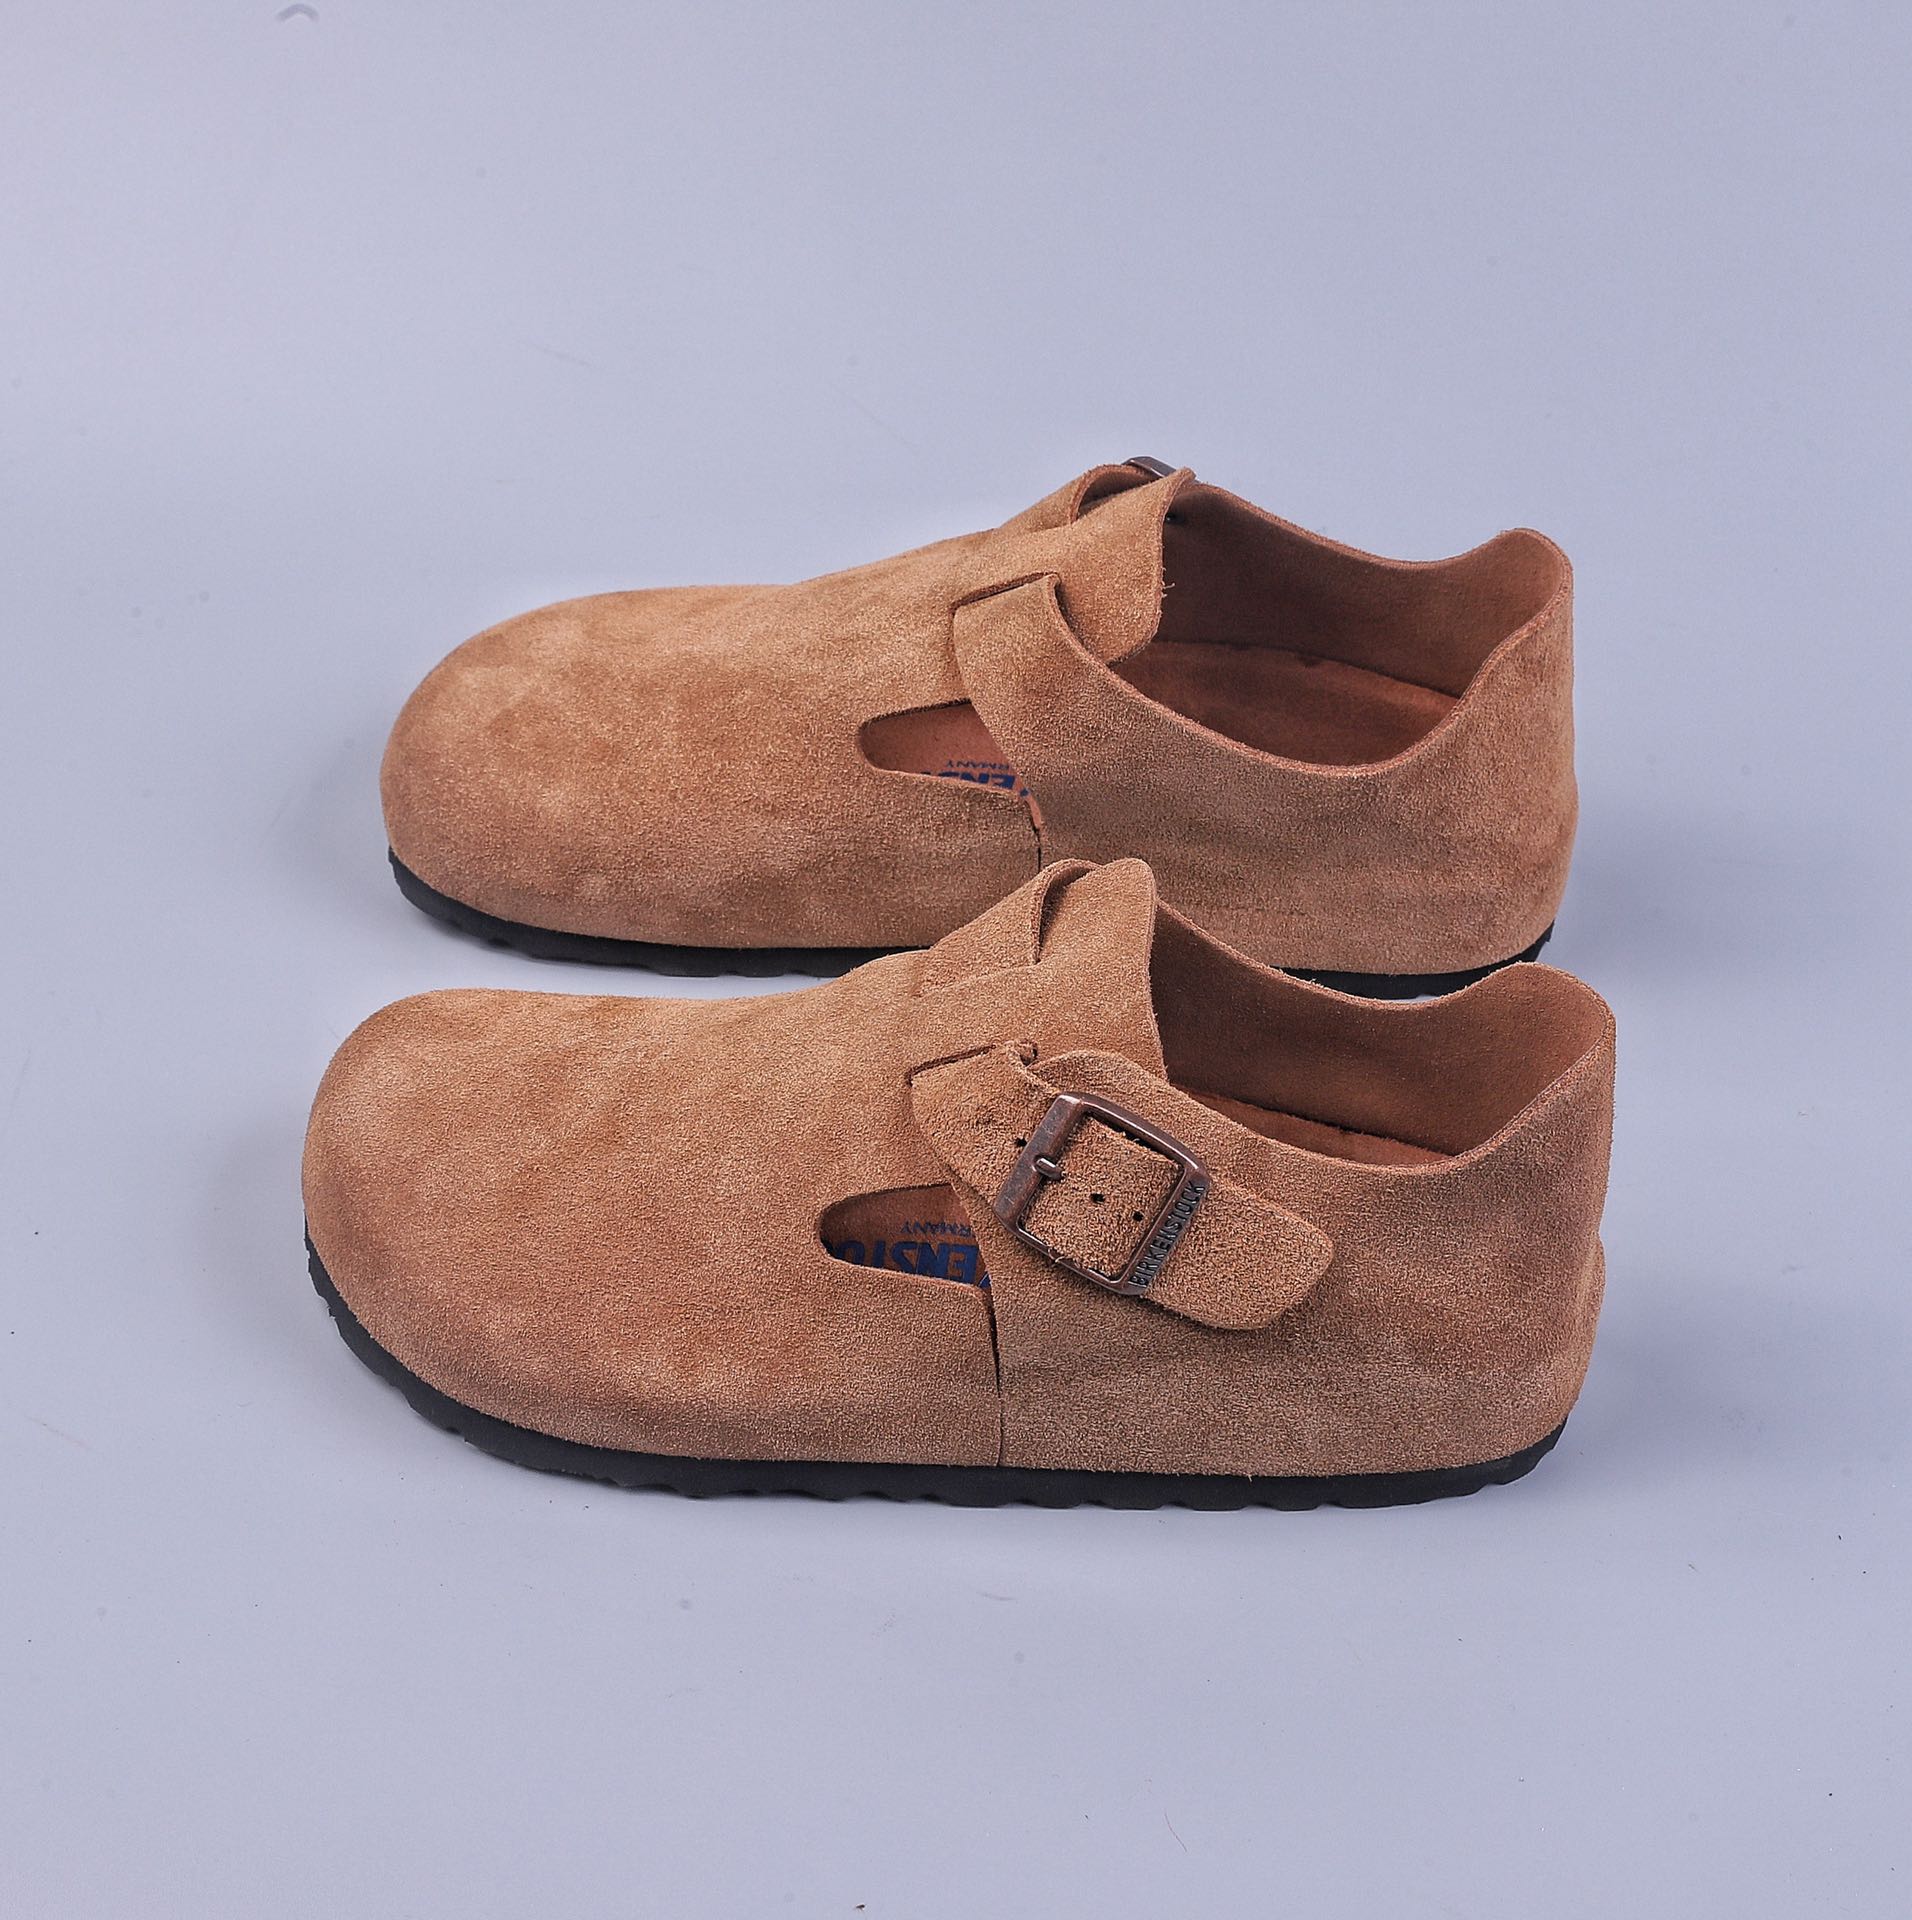 Birkenstock, a century-old German shoe brand